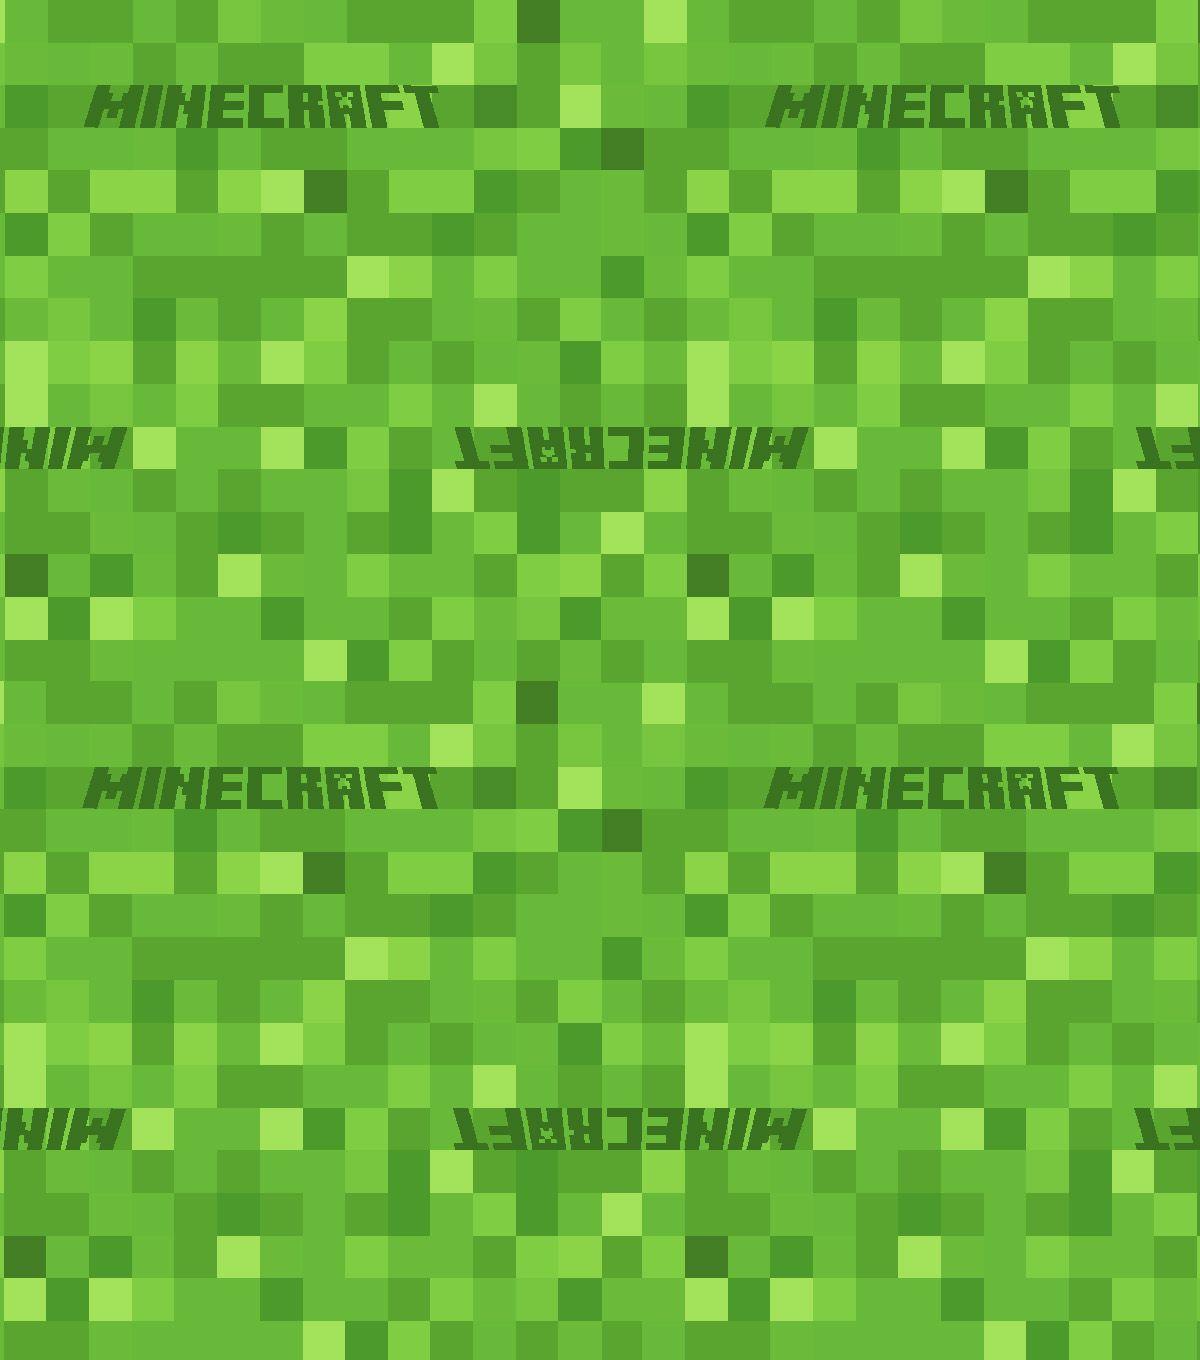 Micraft Logo - Minecraft Cotton Fabric -Pixels with Logo